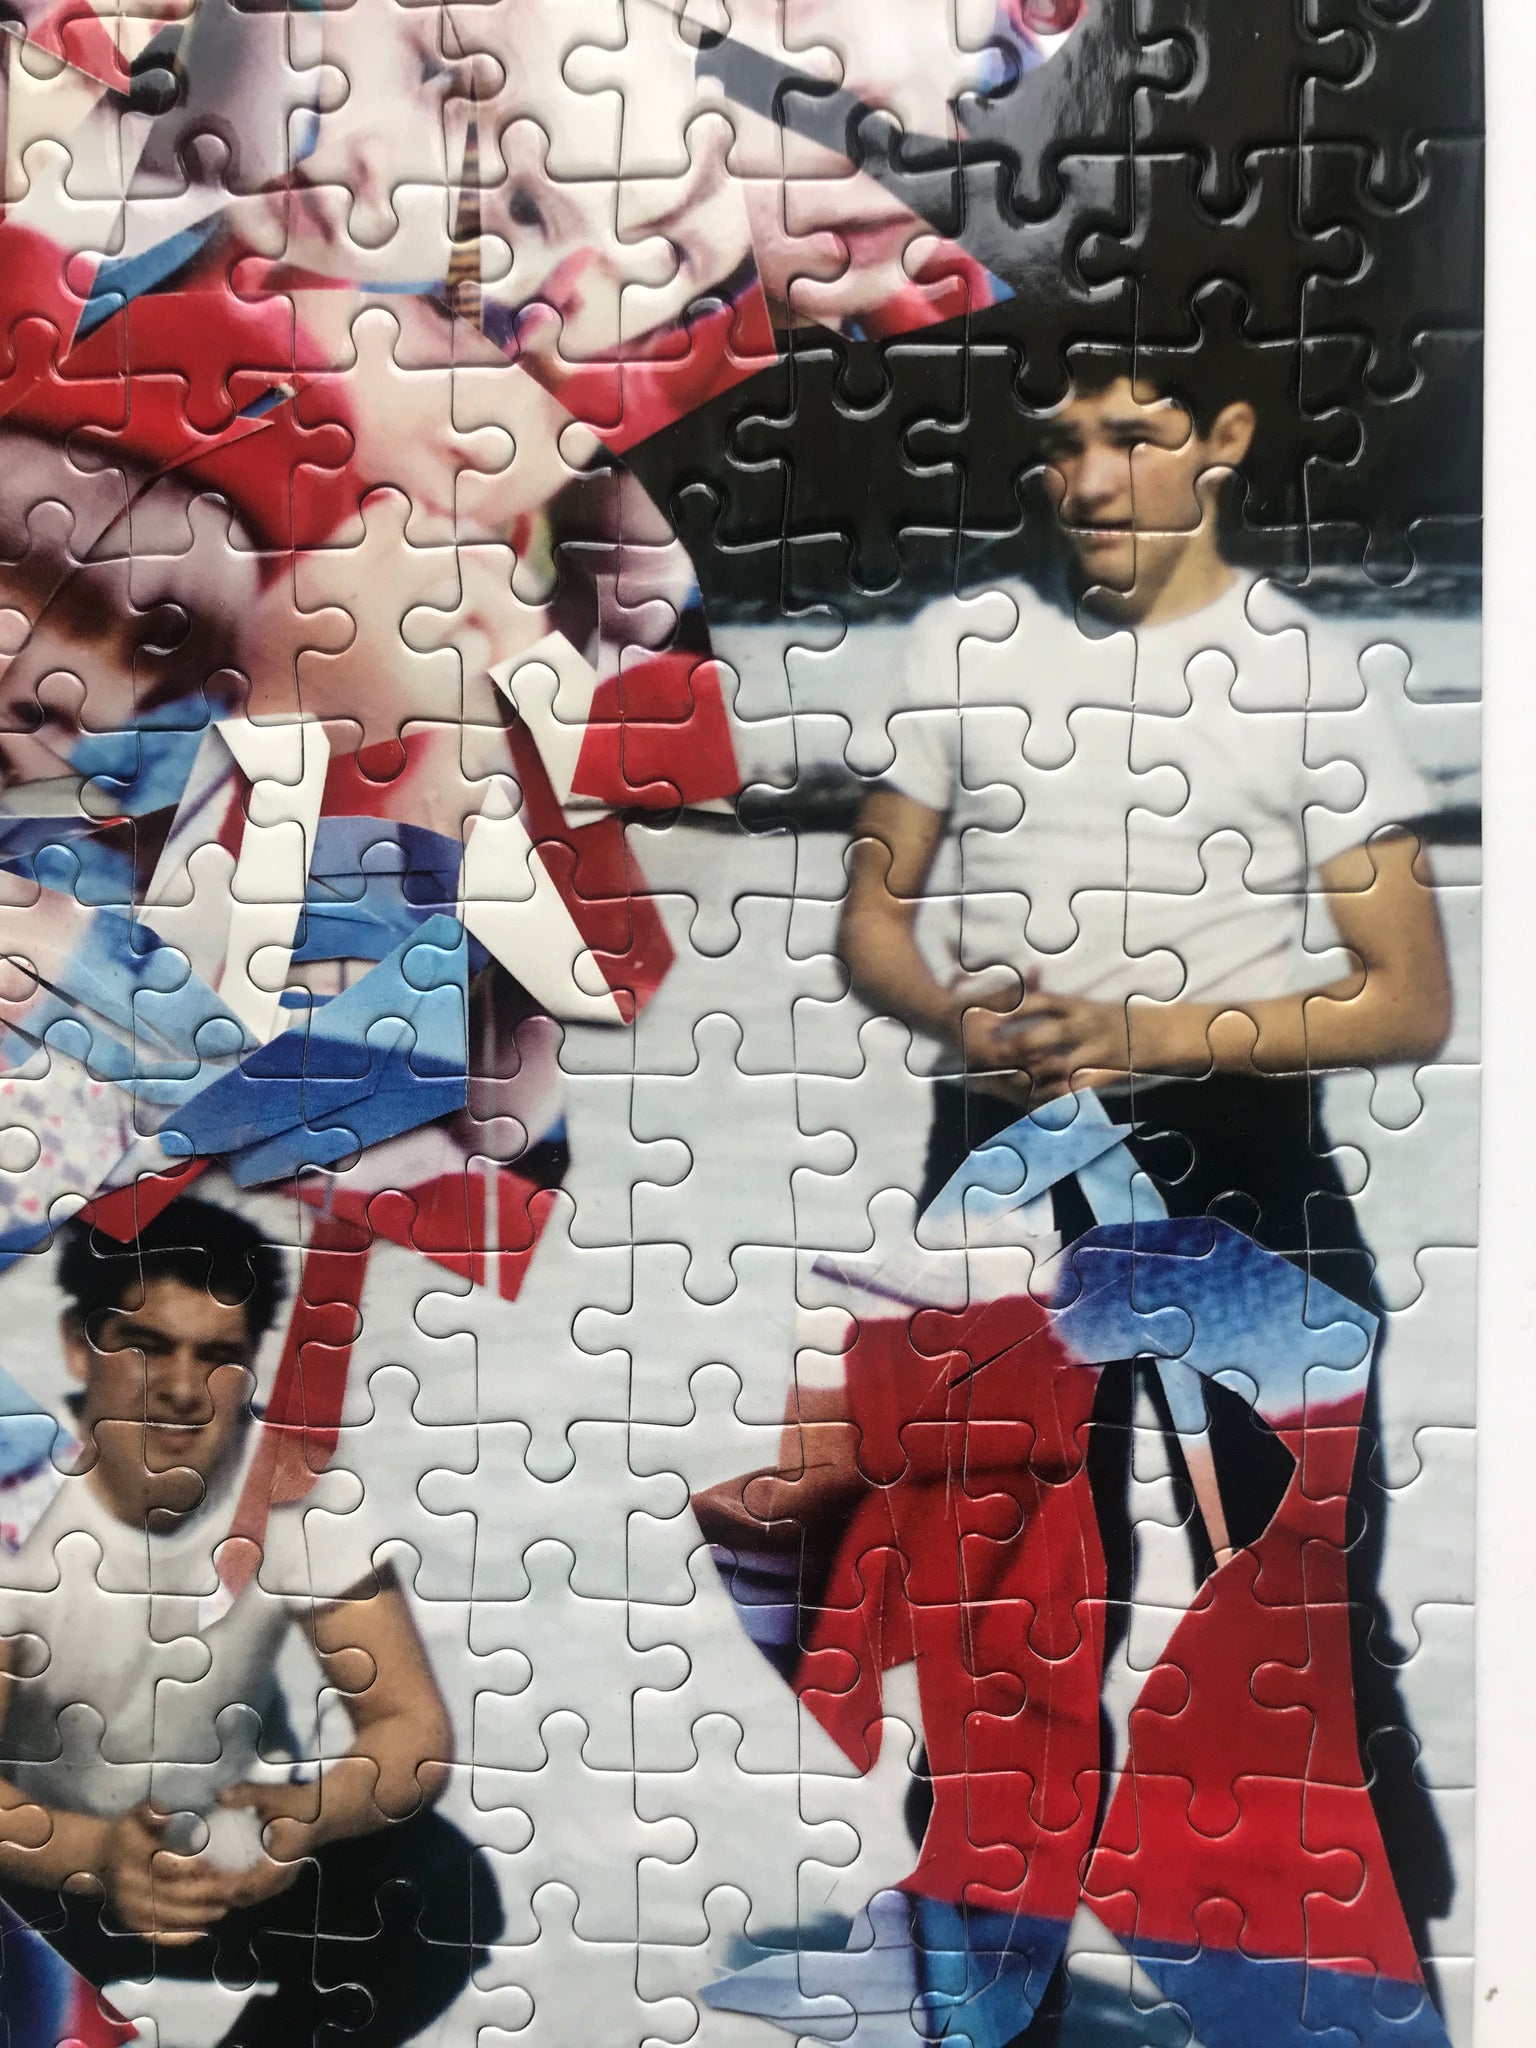 Artist Veronica Smirnoff Jigsaw Puzzle